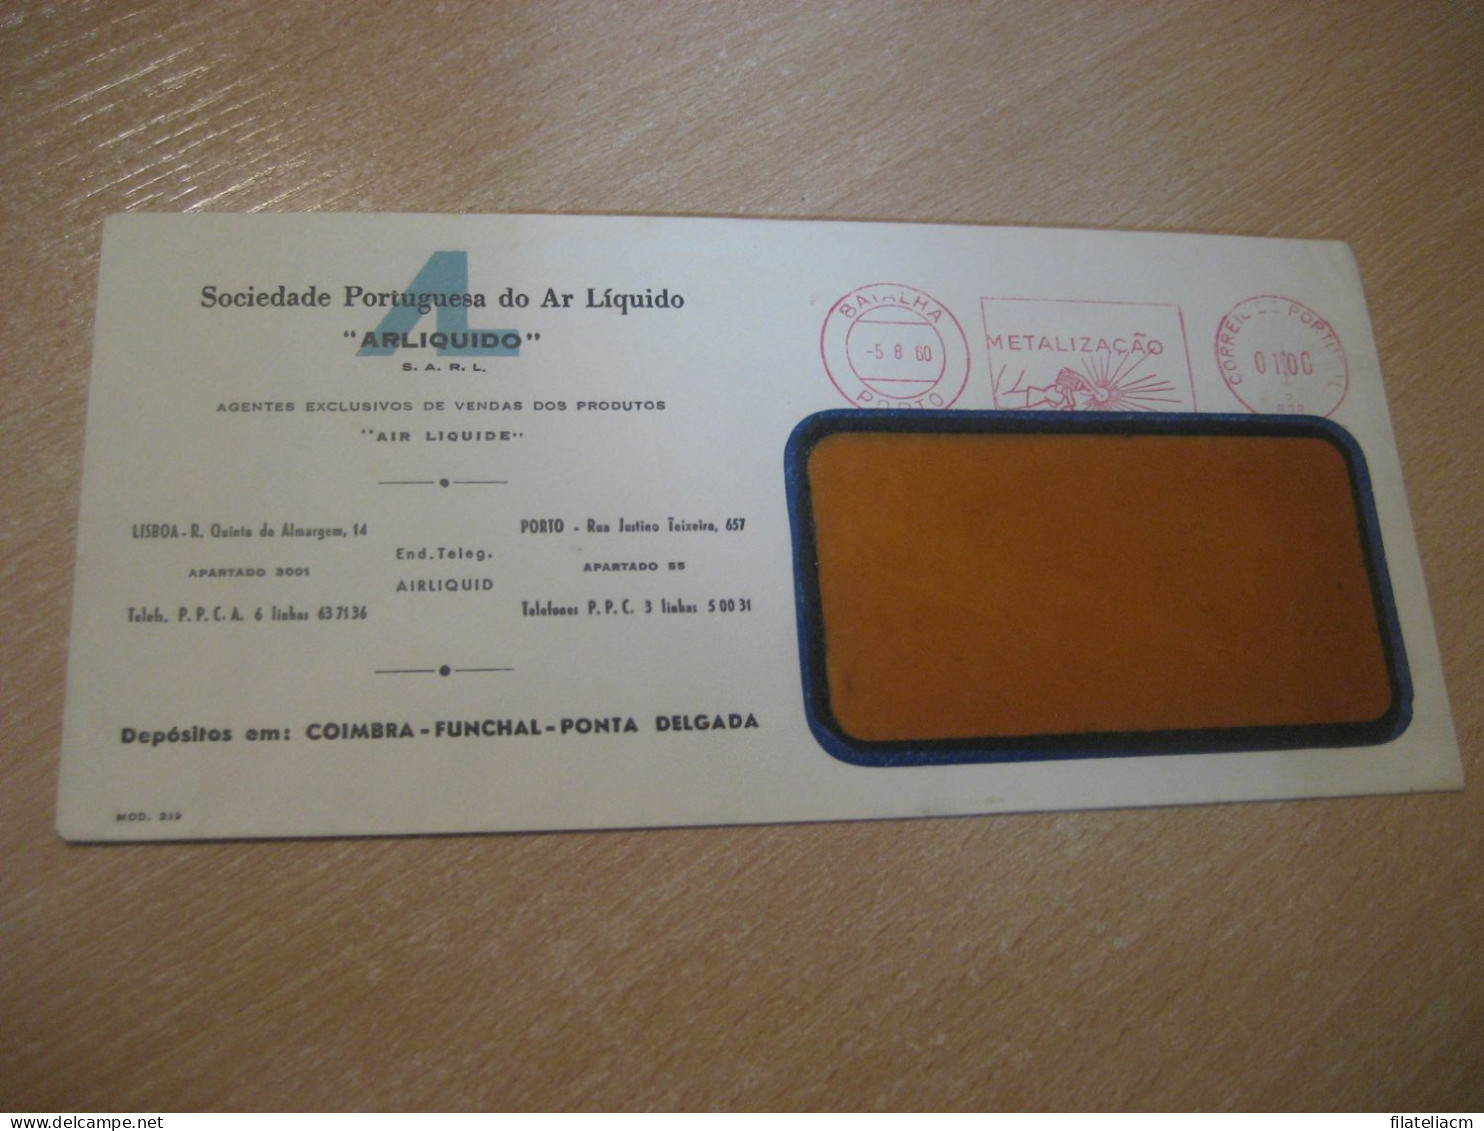 PORTO 1960 ARLIQUIDO Metalizaçao Air Liquide Chemical Physics Meter Mail Cancel Cover PORTUGAL - Covers & Documents